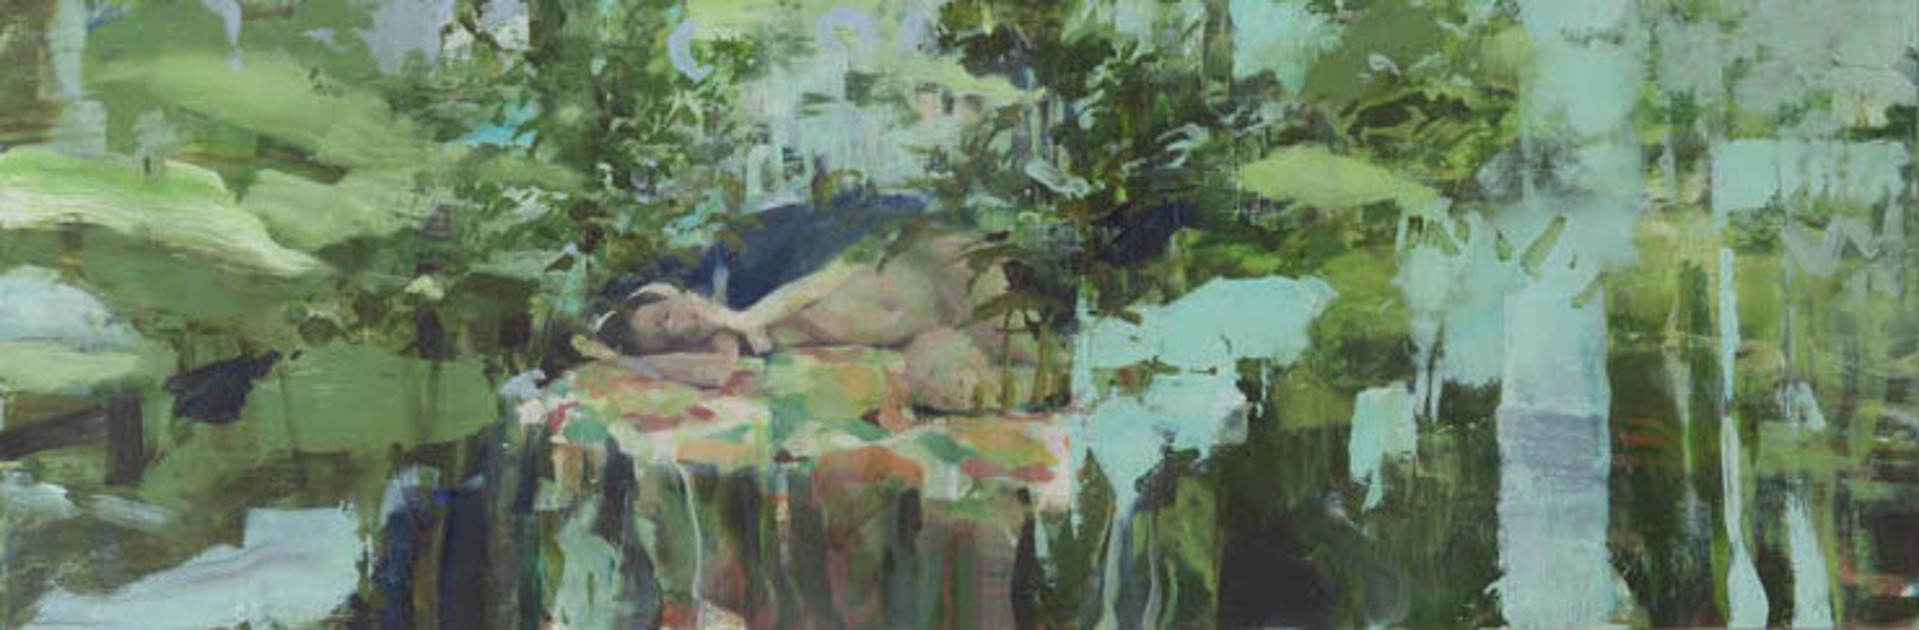 Sleeping in New Hampsire by Alex Kanevsky